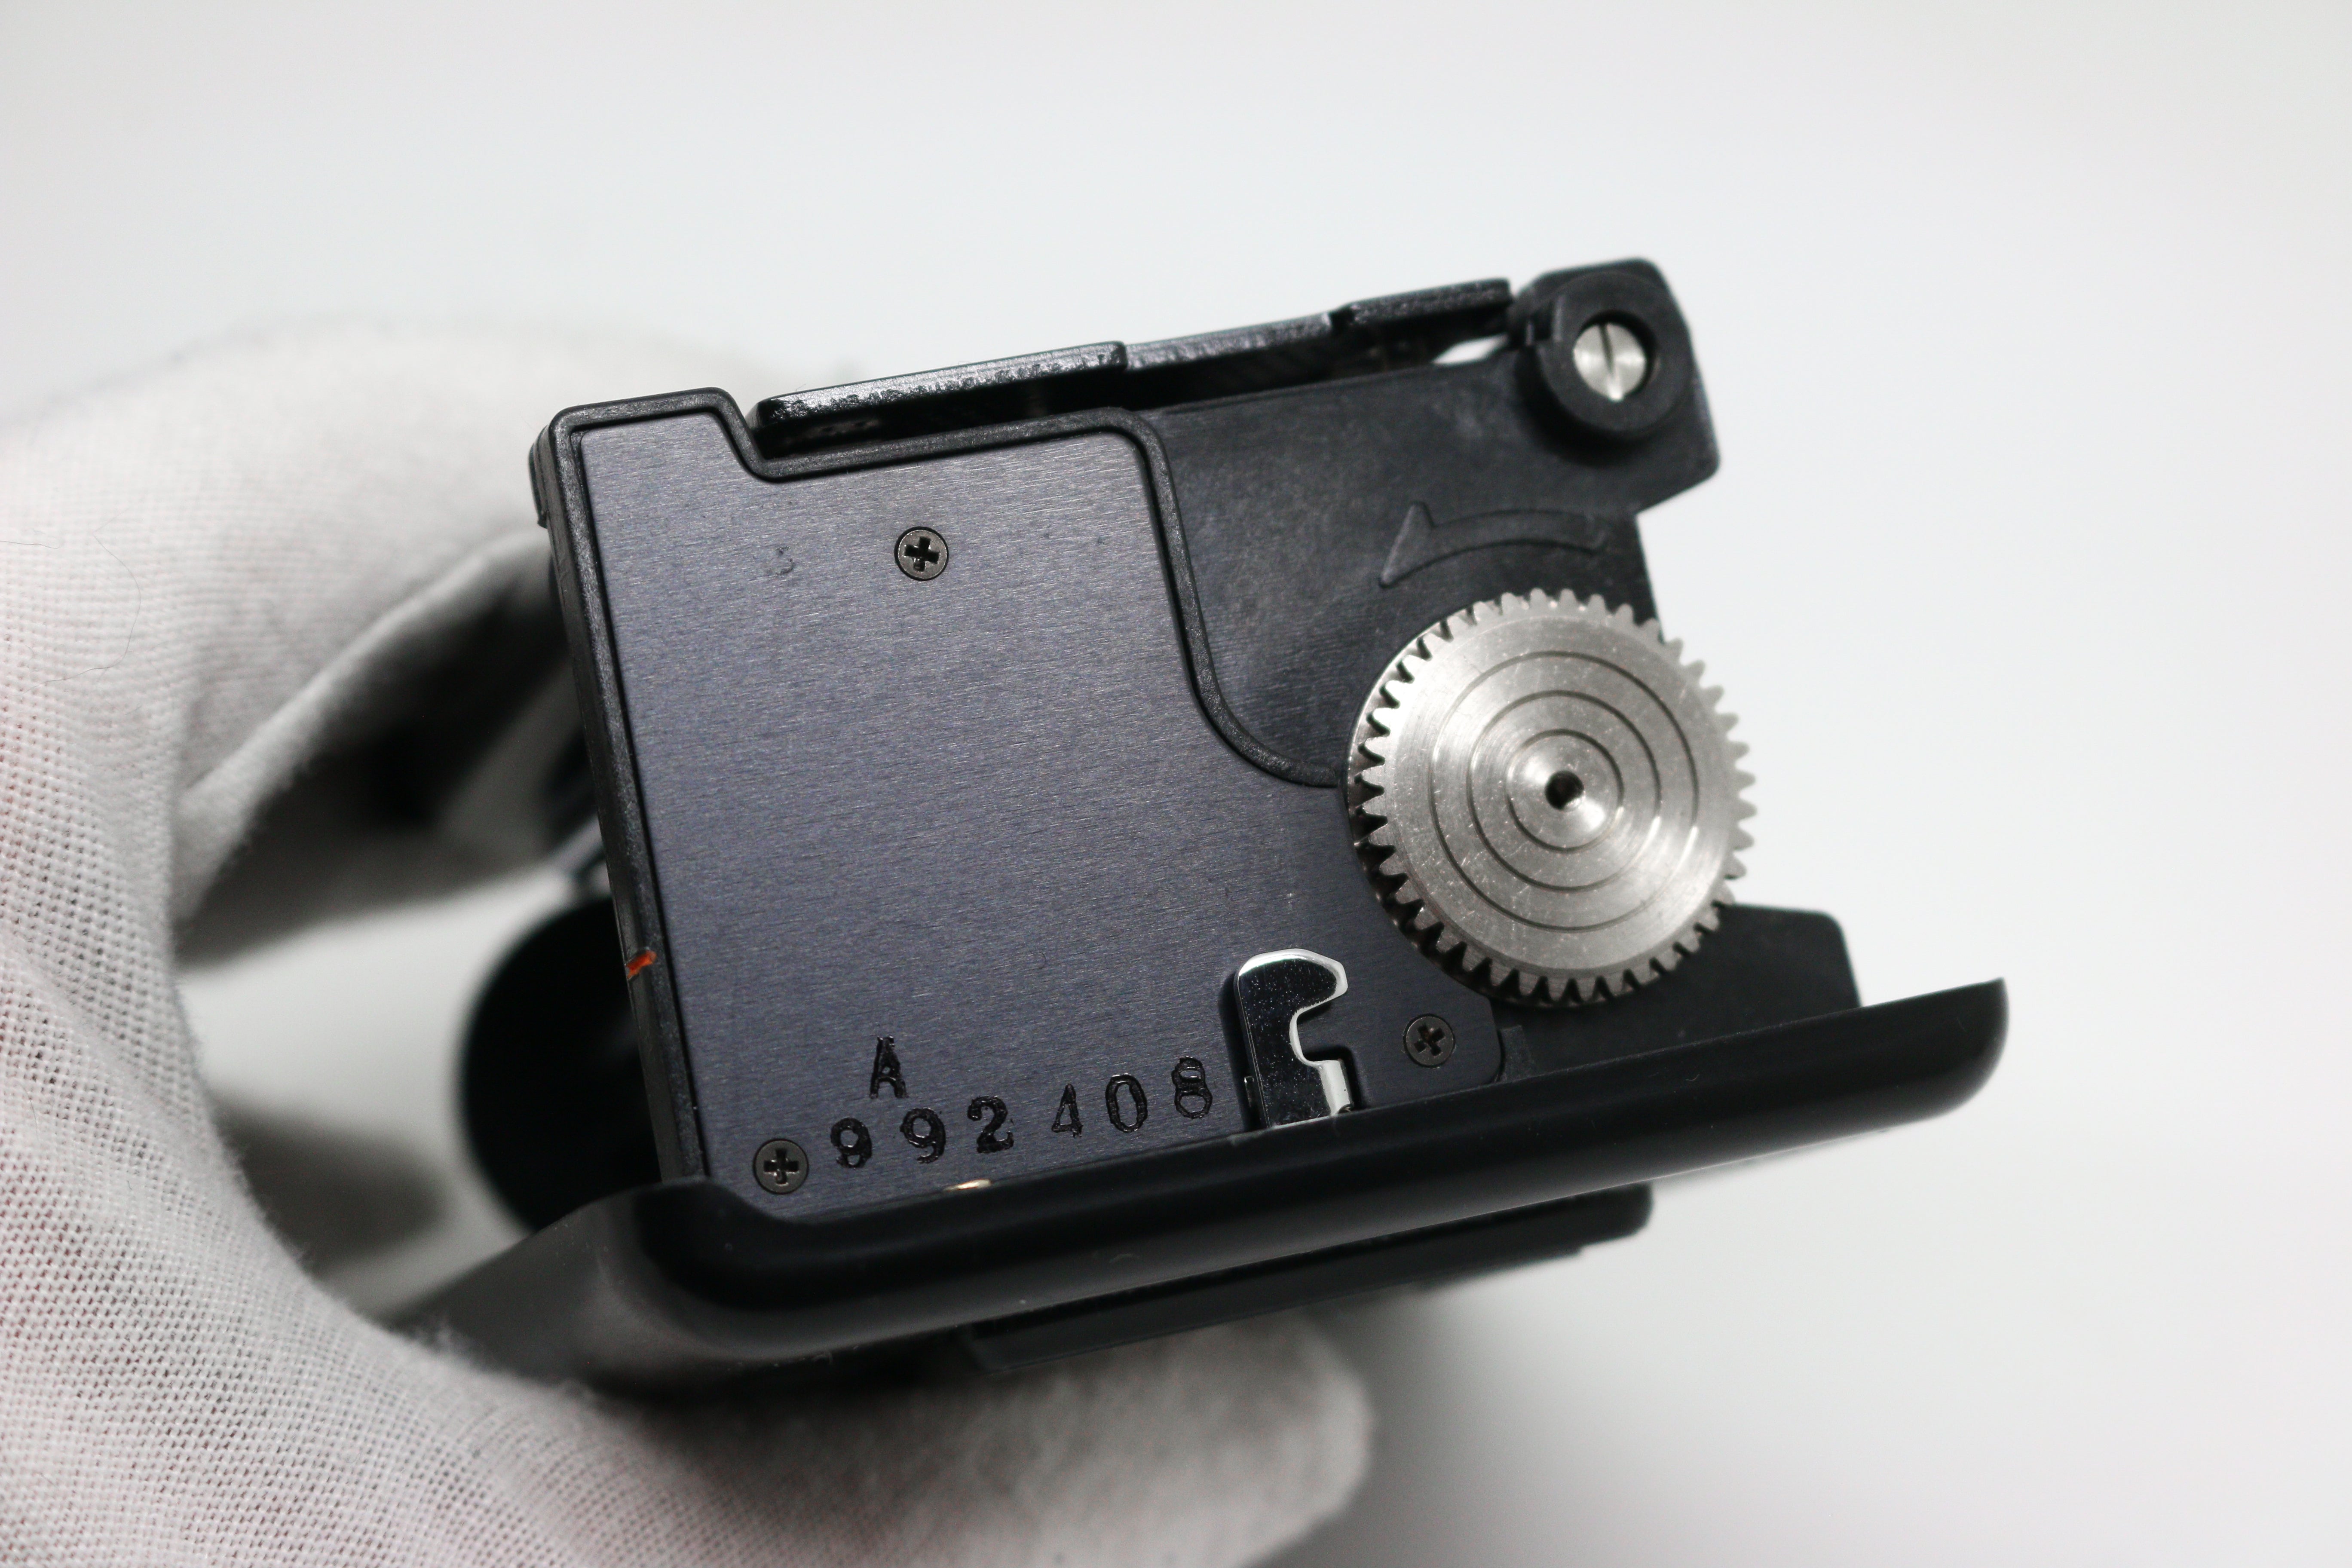 Pentax 645N w/ SMC 75mm F/2.8 FA Lens w/ Pentax Strap